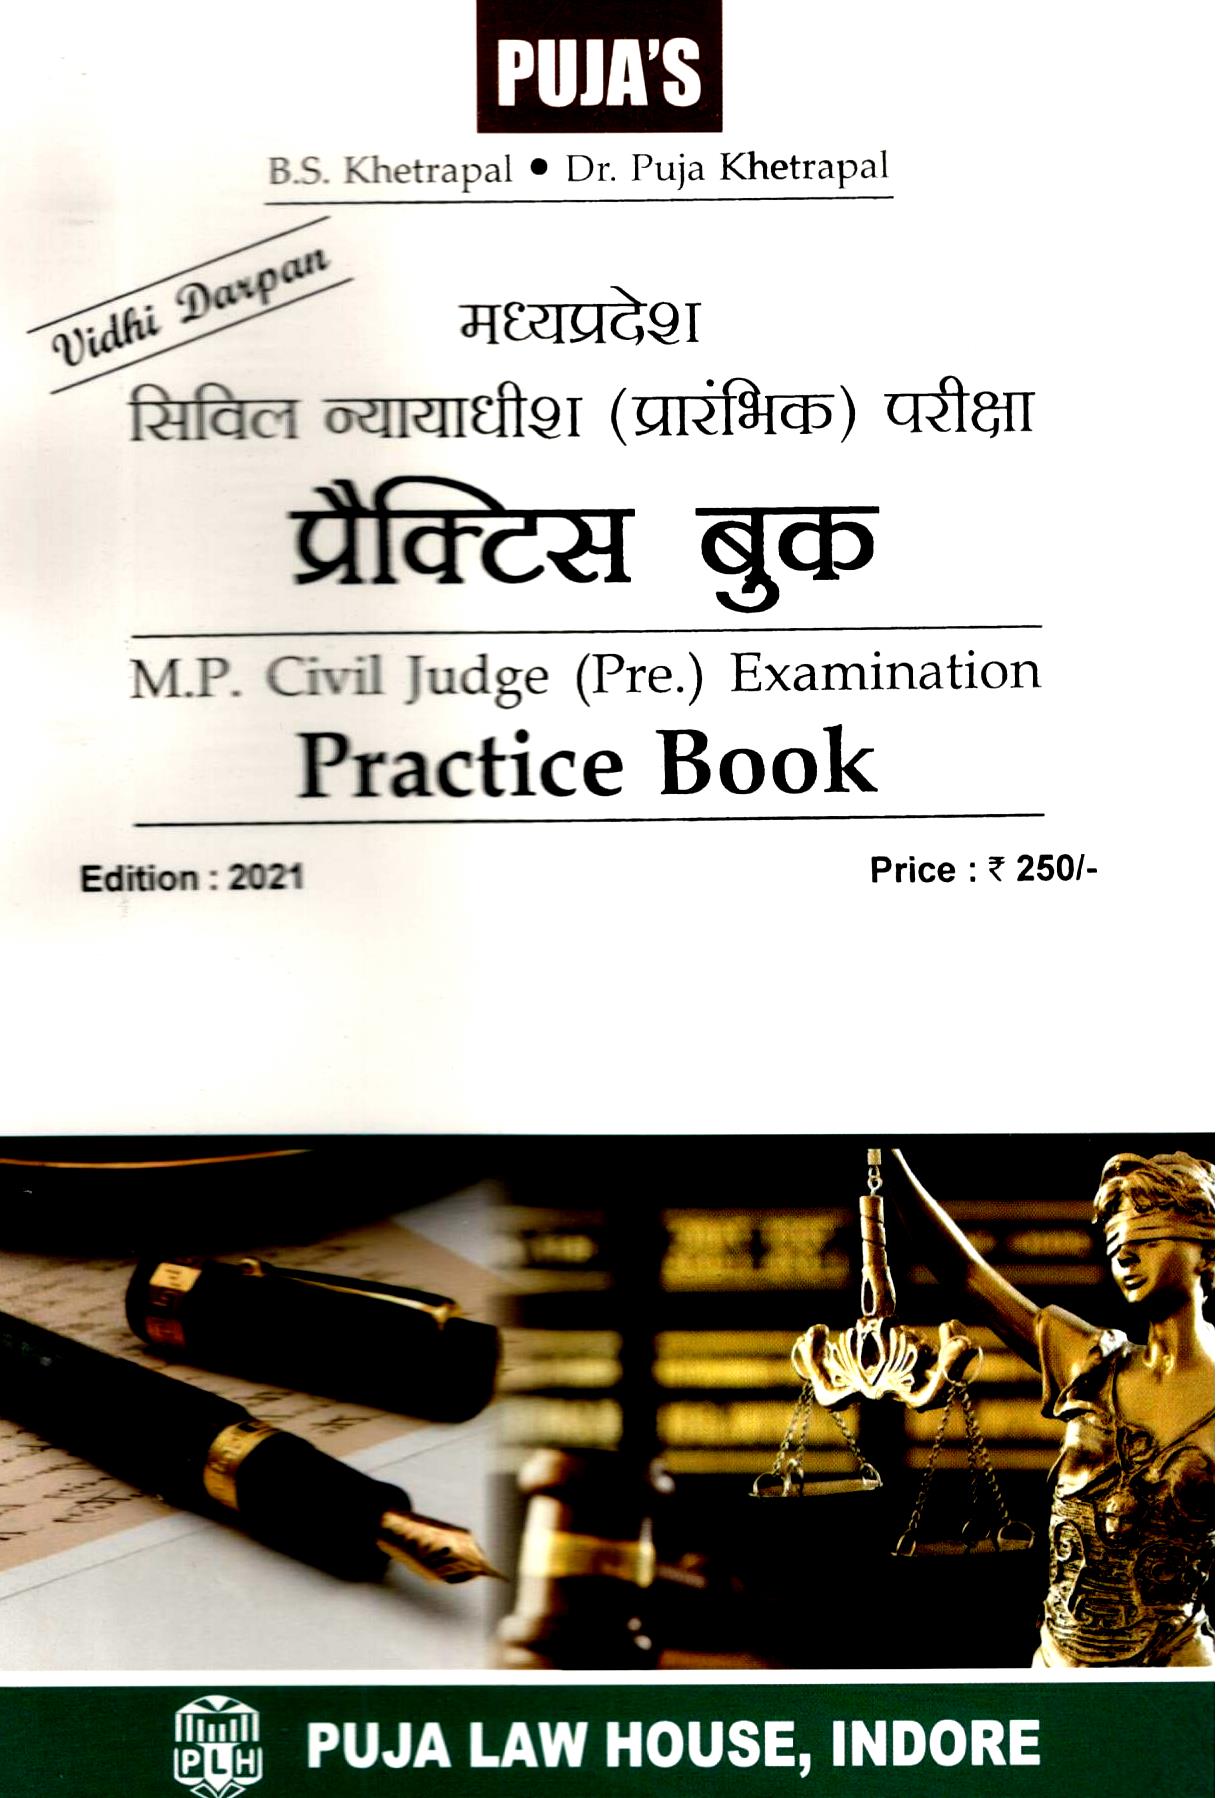  Buy M.P. Civil Judge (Pre.) Examination Practice Book / बी.एस. खेत्रपाल | डॉ पूजा खेत्रपाल मध्य प्रदेश सिविल न्यायाधीश (प्रारंभिक) परीक्षा प्रैक्टिस बुक